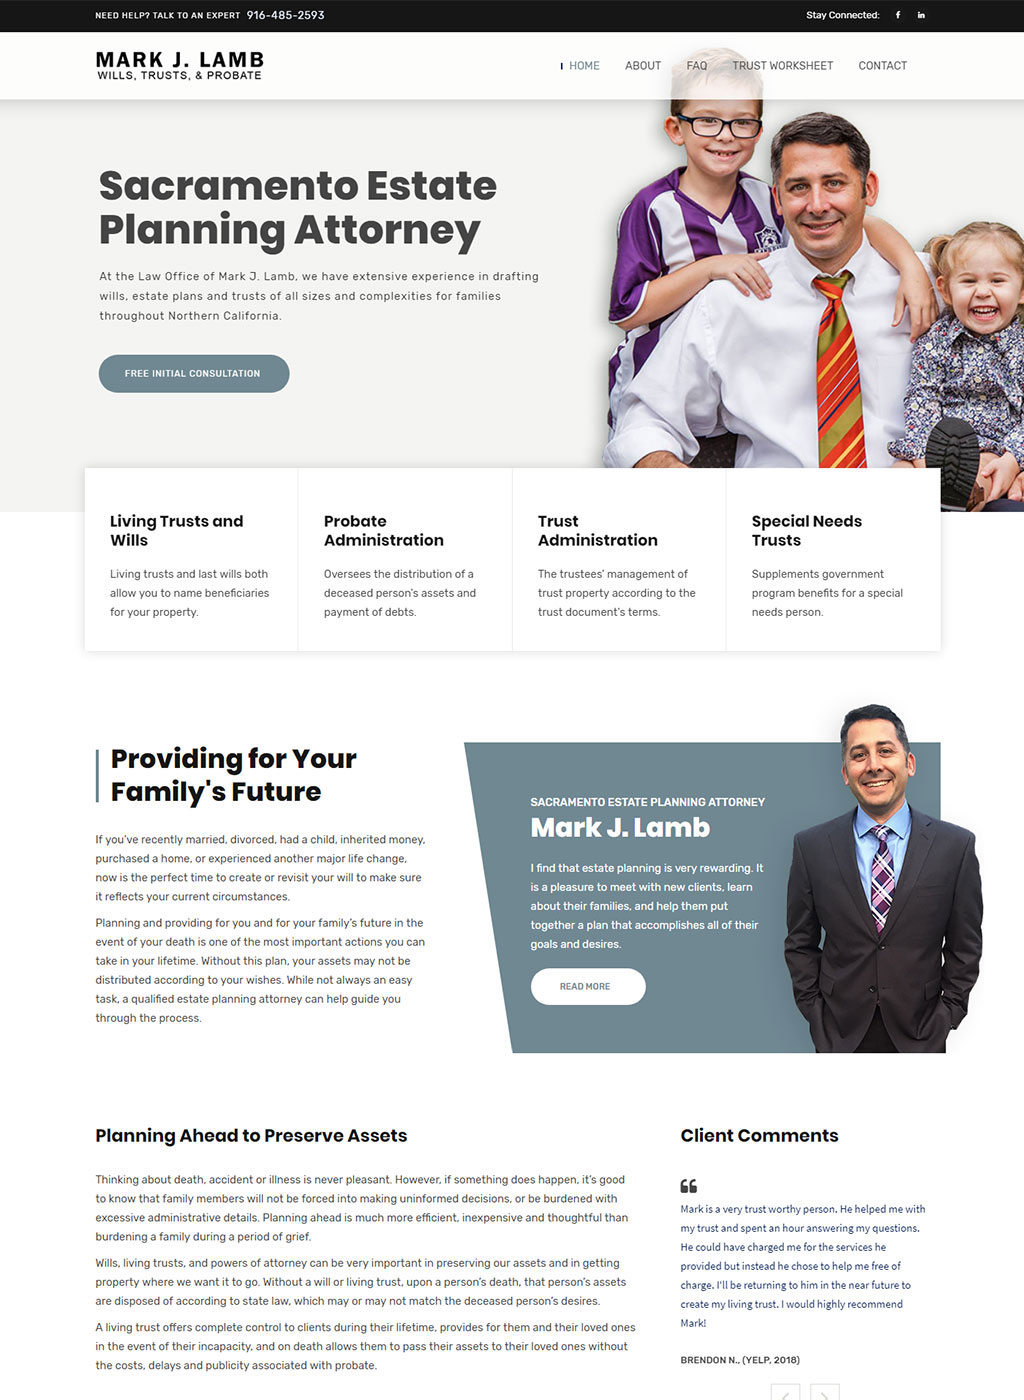 Website developed for a Sacramento estate planning attorney